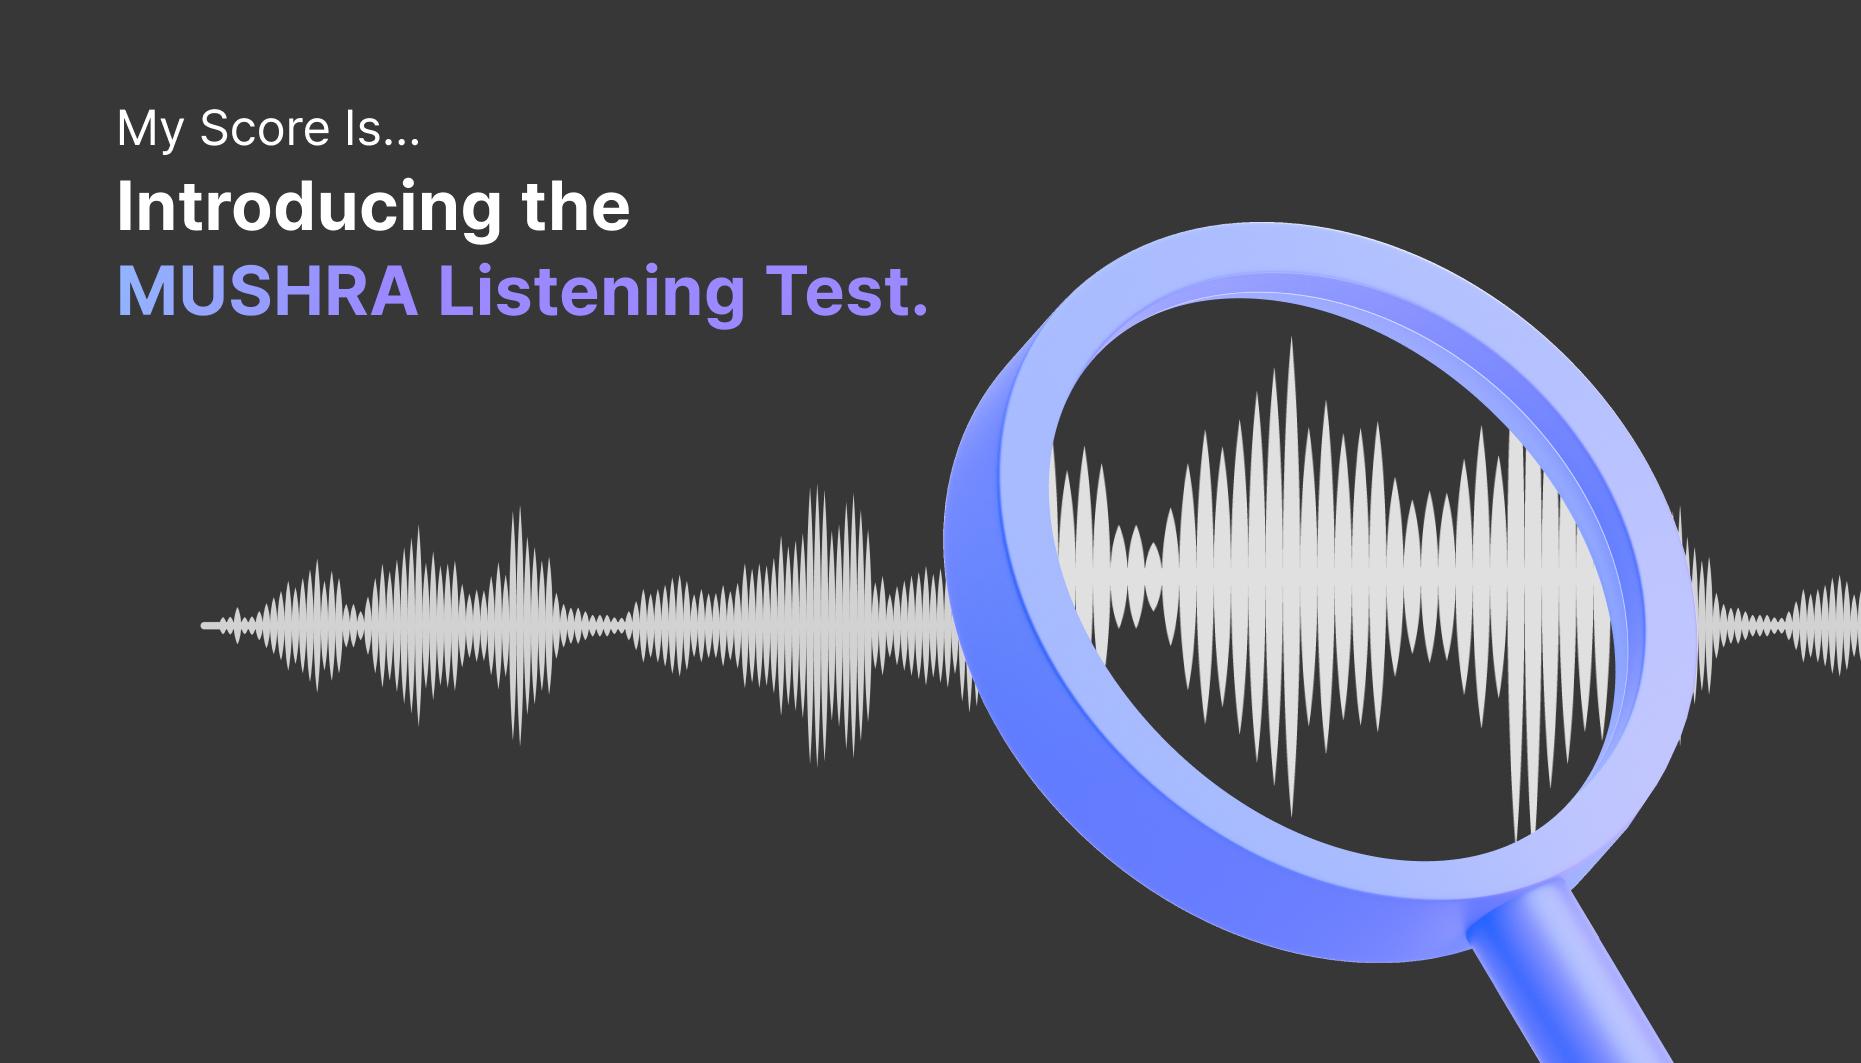 My Score Is... Introducing the MUSHRA Listening Test